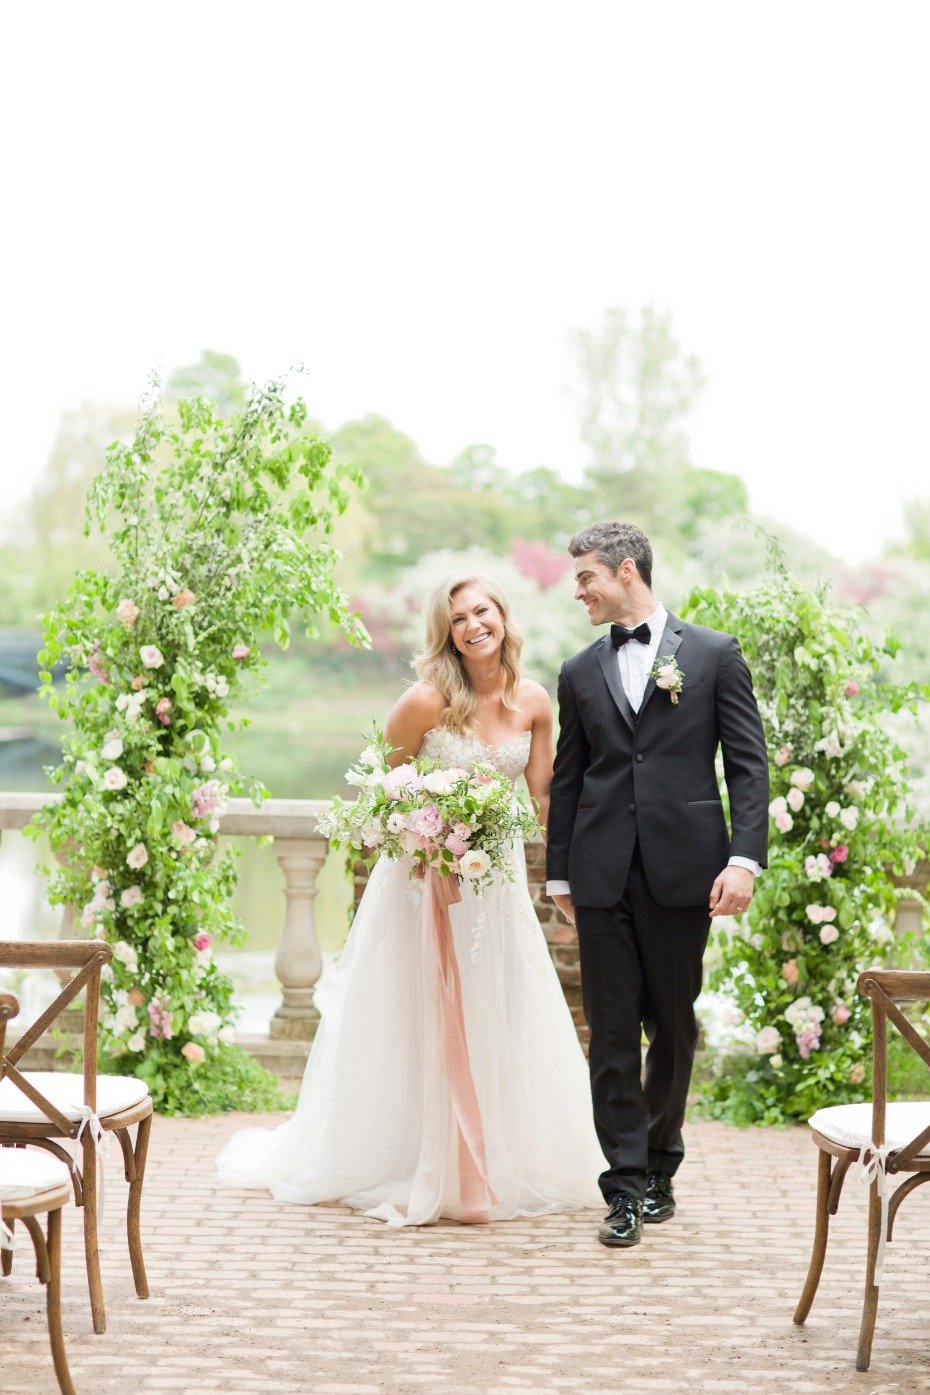 Luxurious garden wedding inspiration